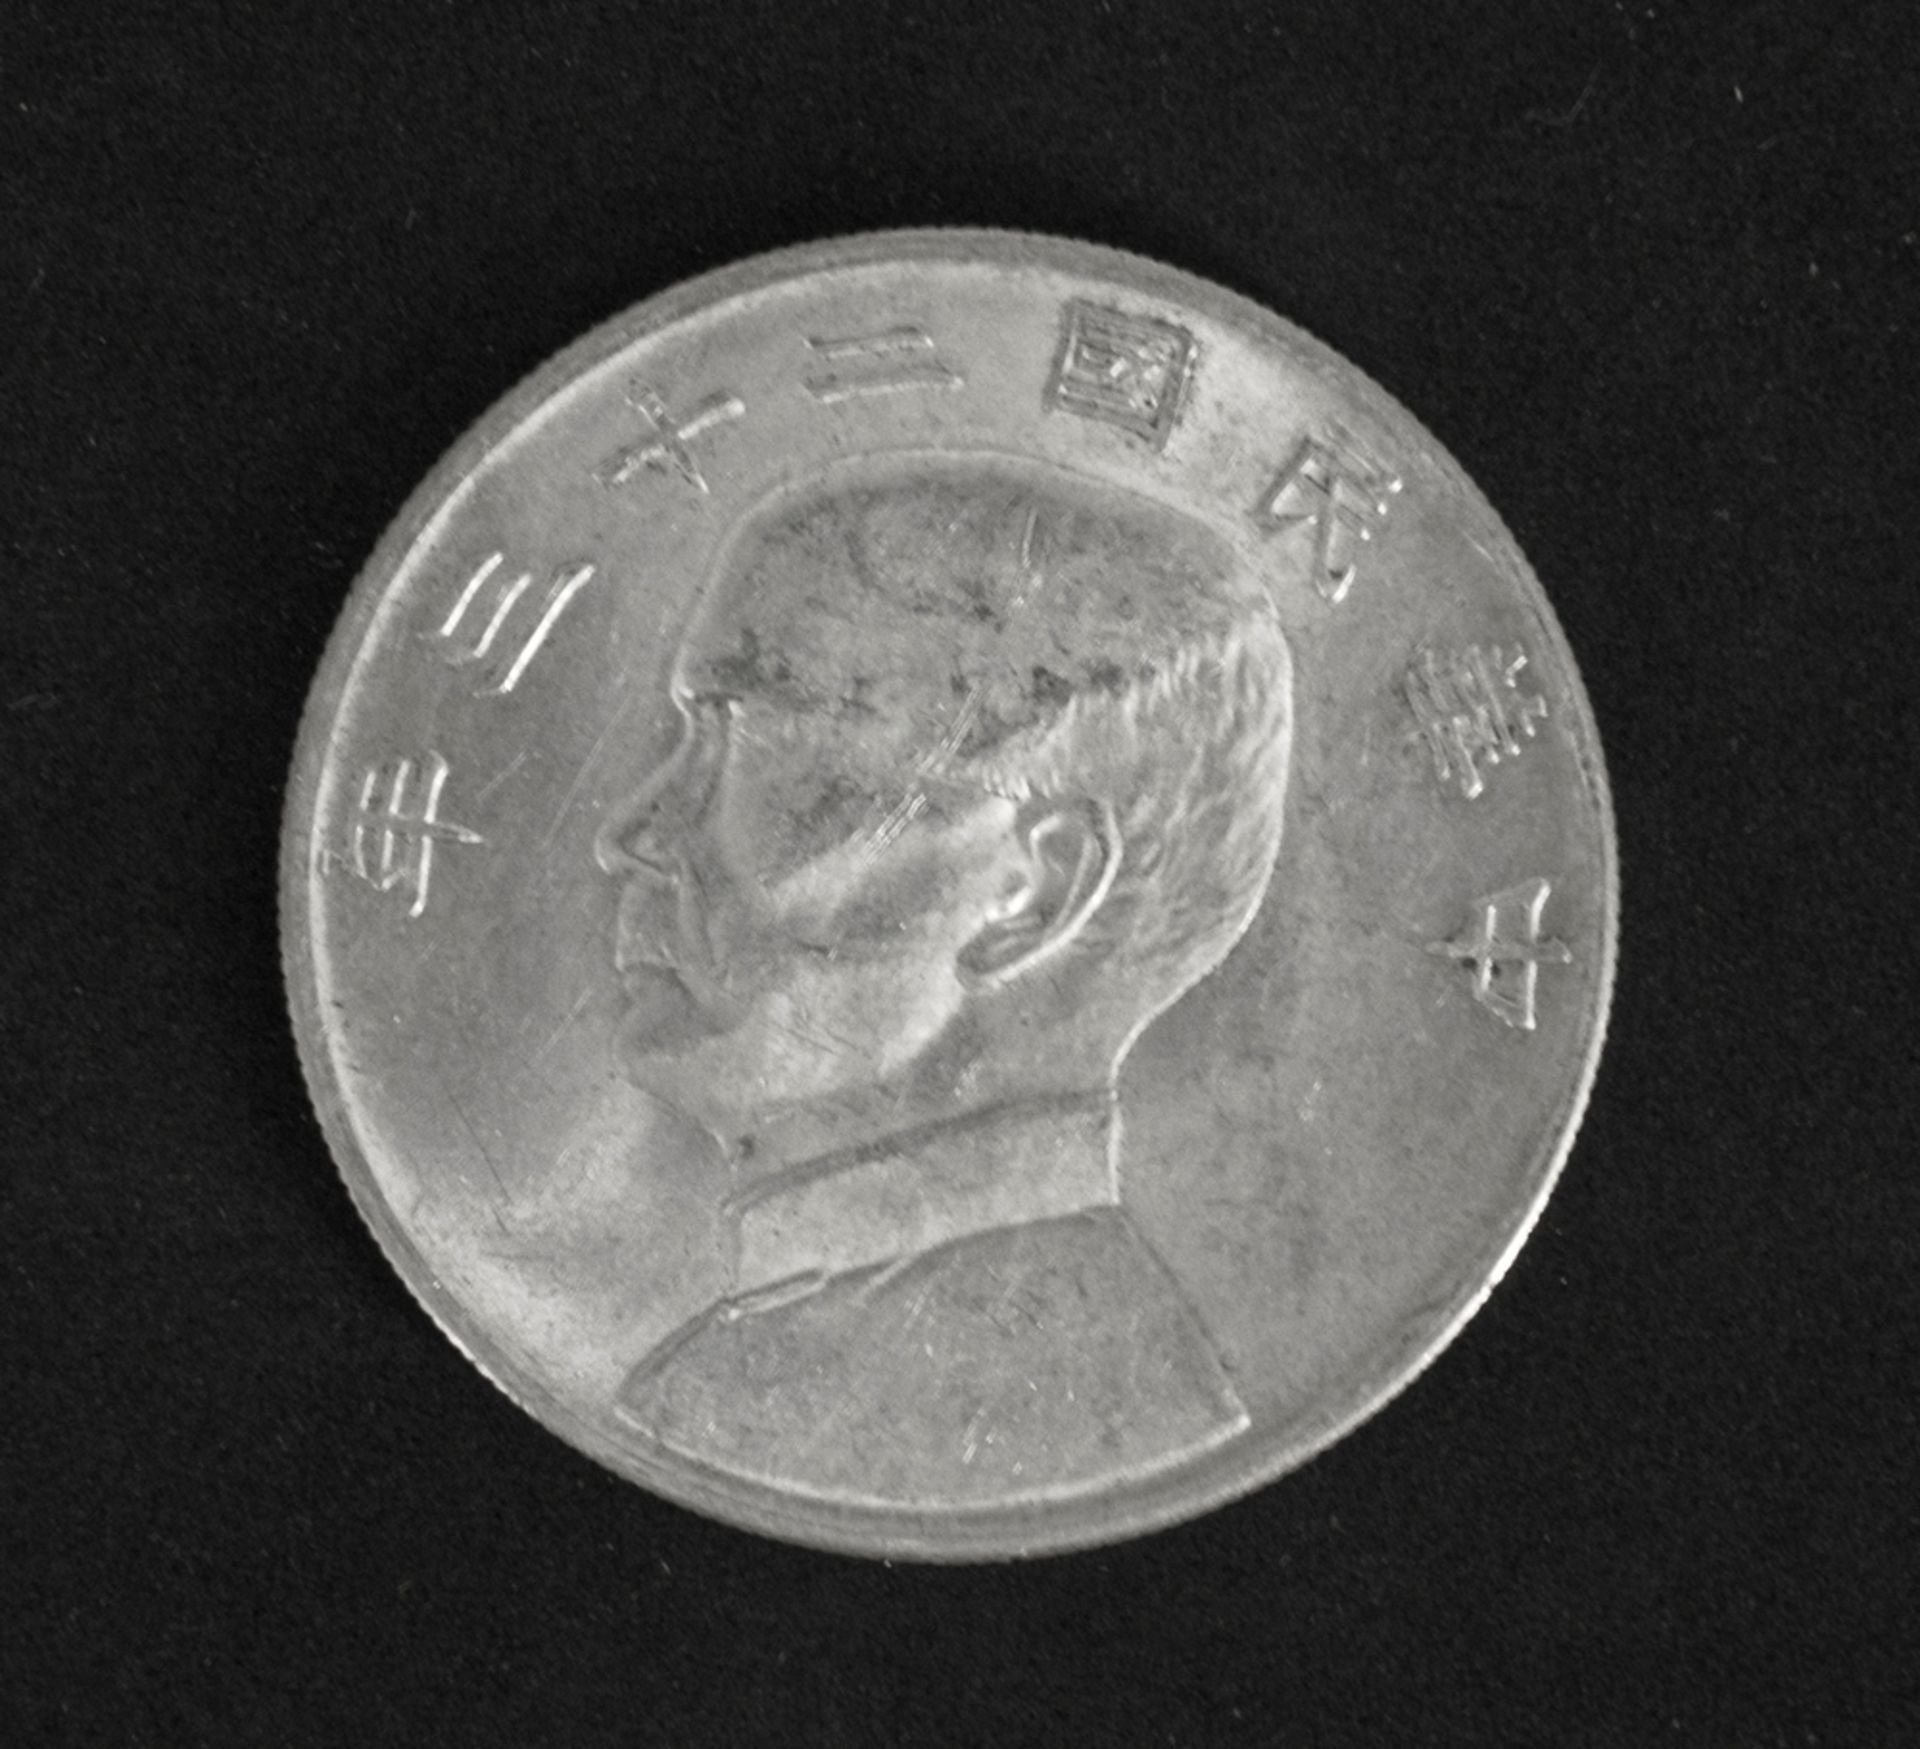 China Republik, 1 Dollar "Dr. Sun Yat Sen - Dschunke". Silber. Erhaltung: ss.